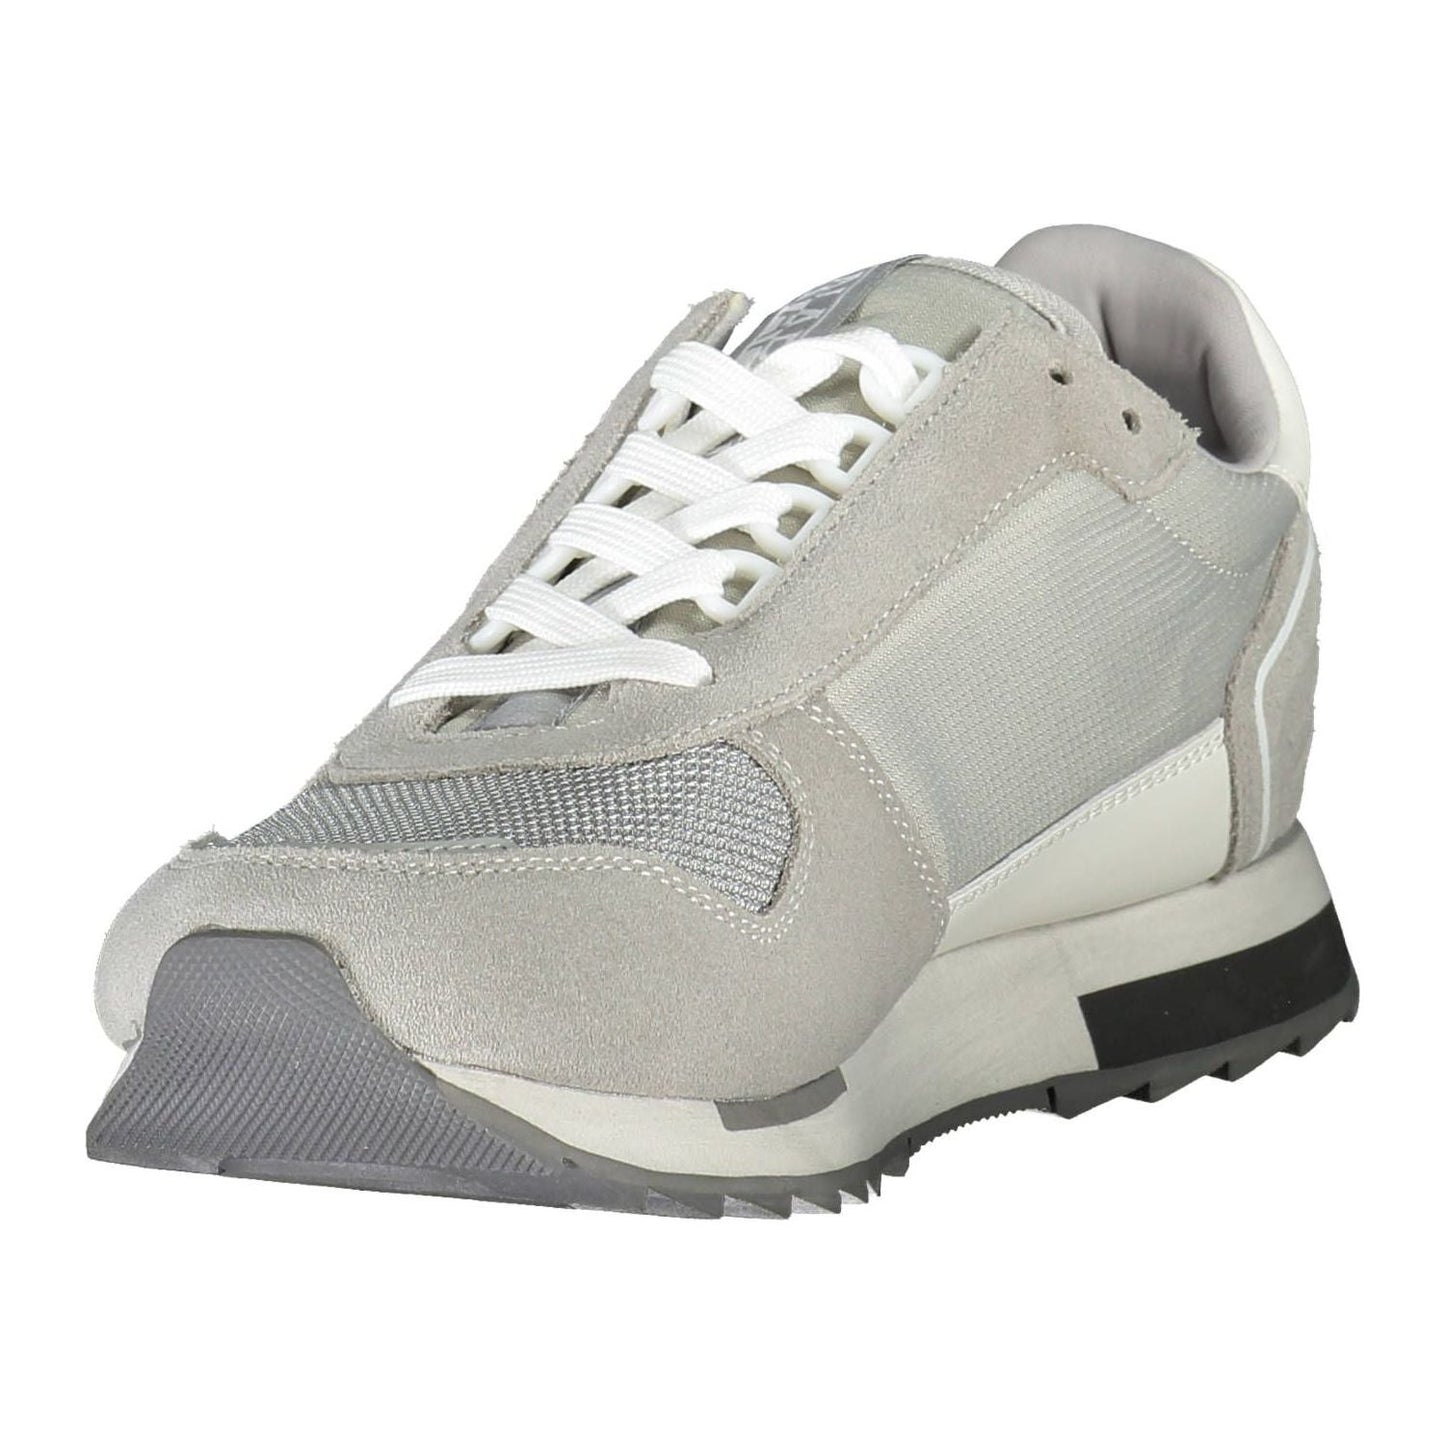 Napapijri Gray Contrast Lace-Up Sneakers gray-contrast-lace-up-sneakers